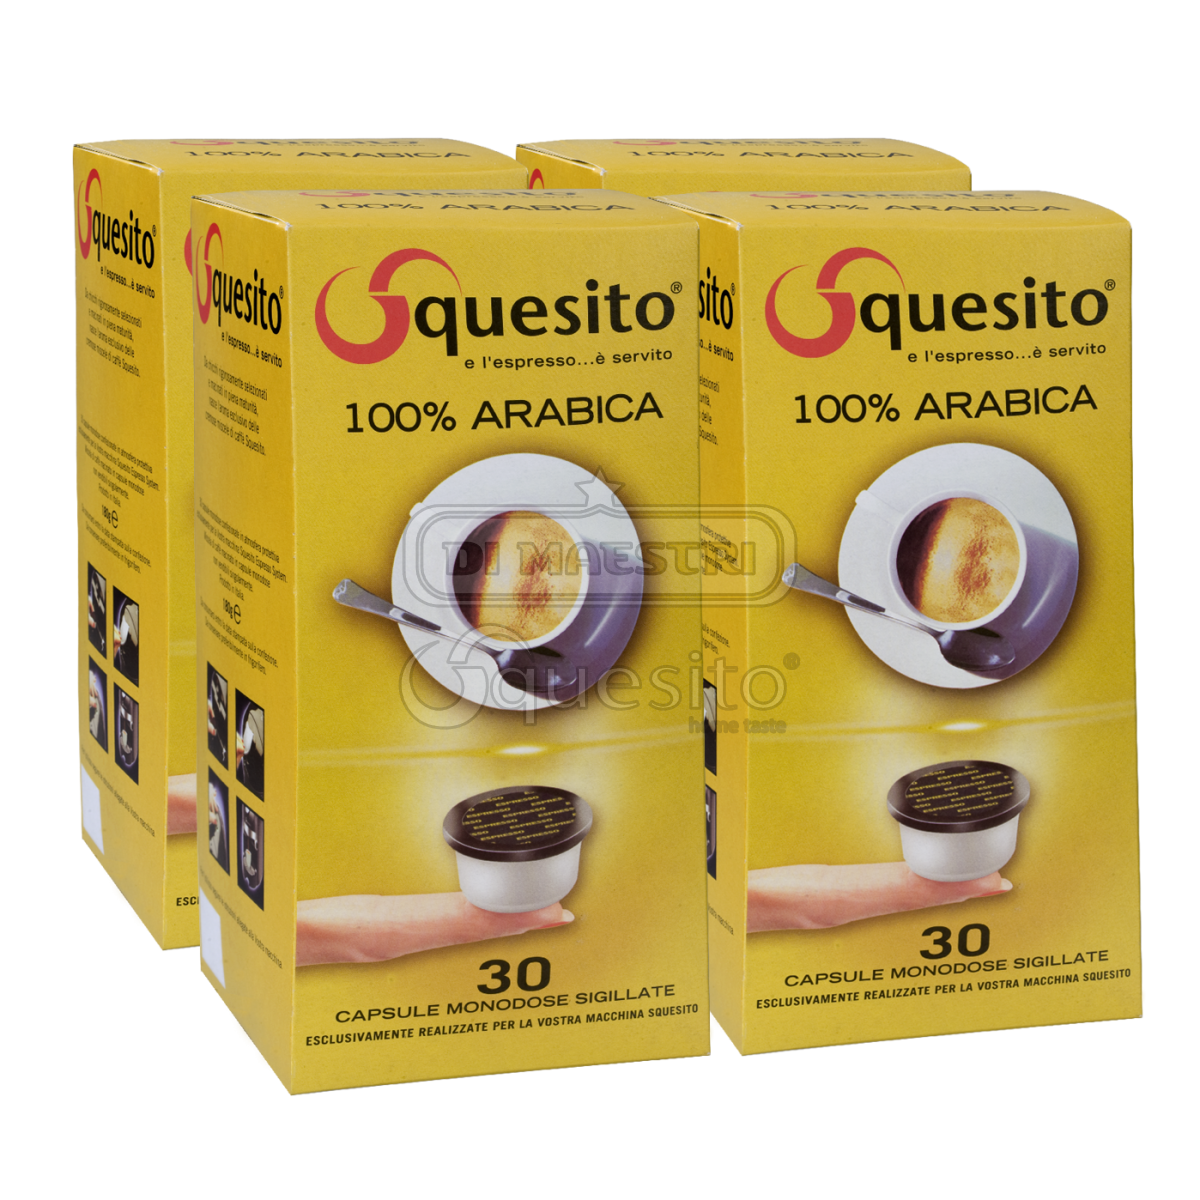 Squesito Rotonda капсулы. Squesito Arabica, 30 капсул кофе. Кофе в капсулах Squesito. Squesito капсулы многоразовые. Squesito капсулы купить